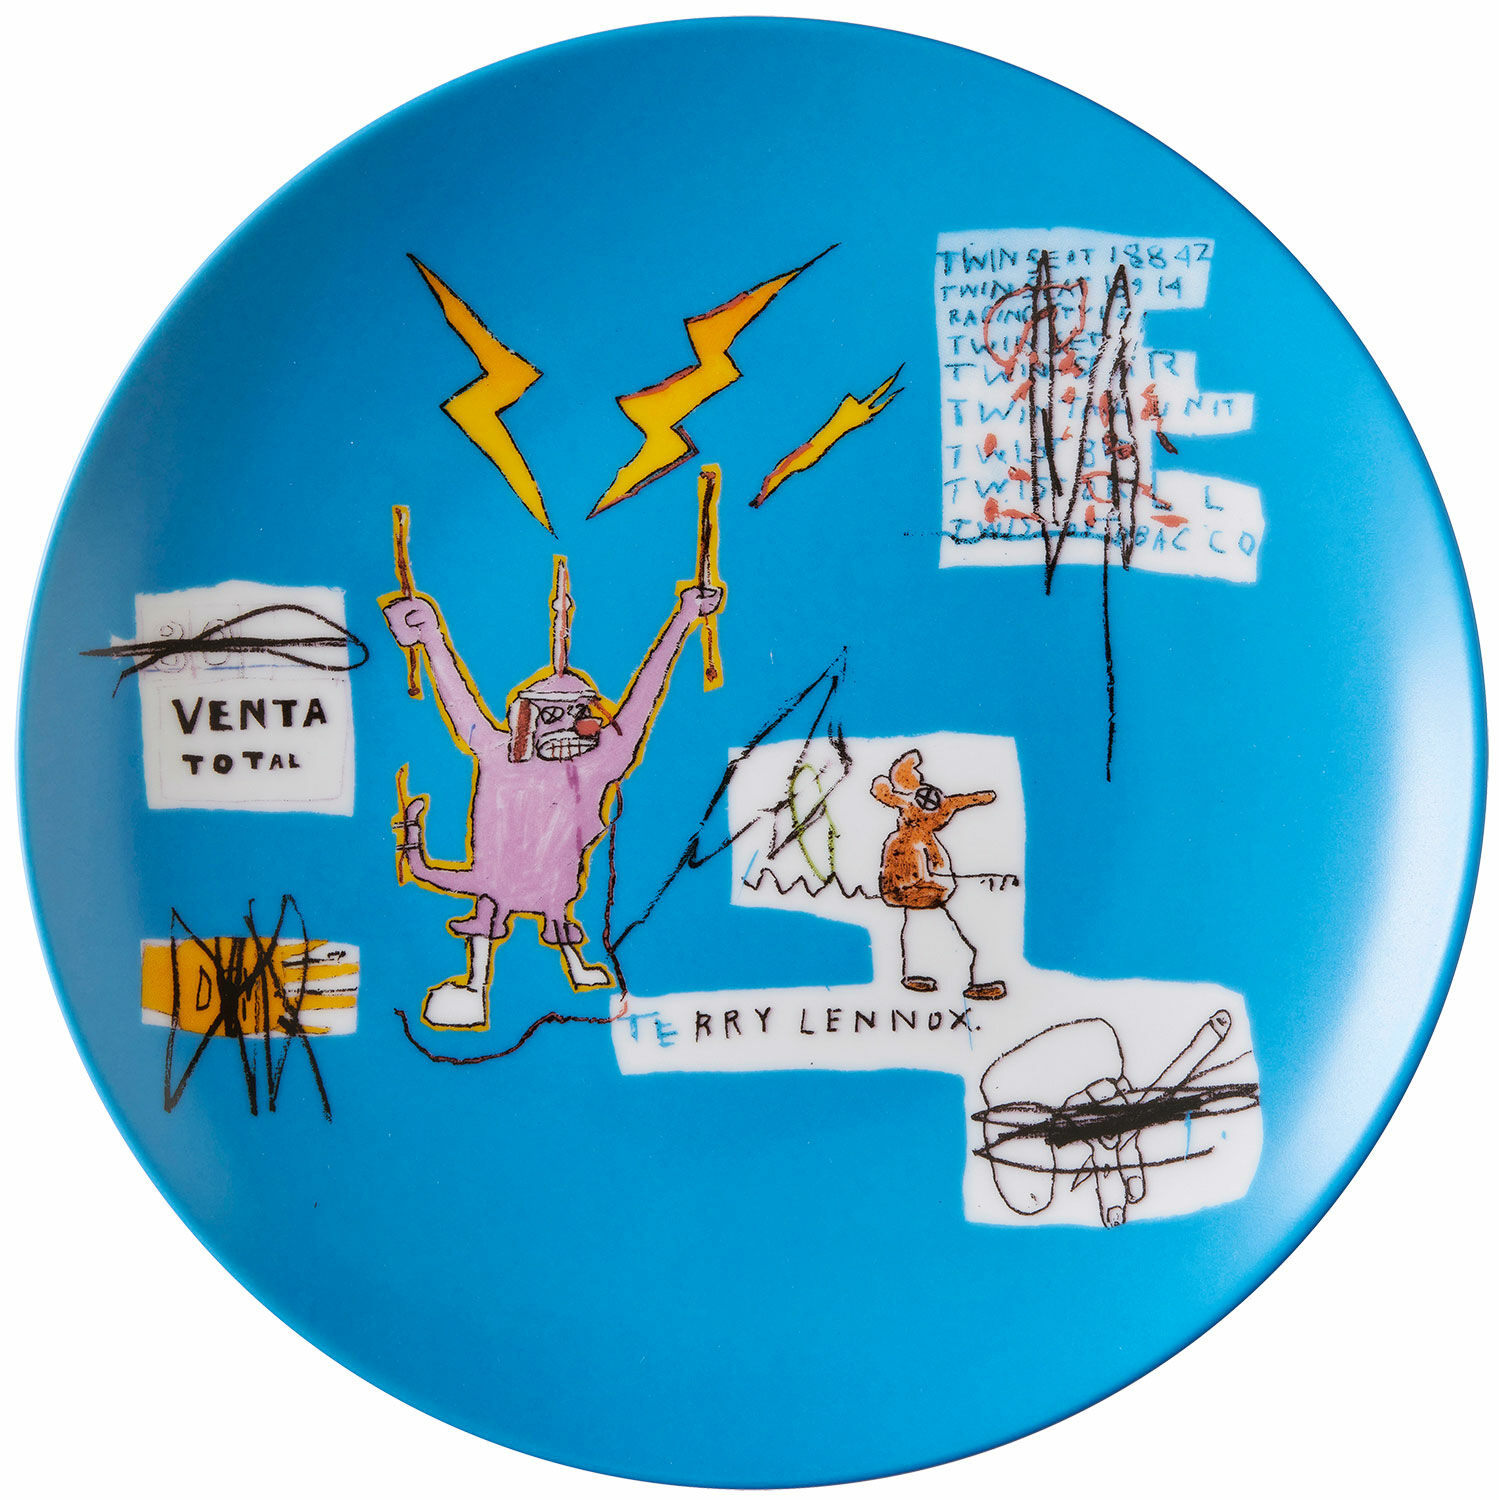 Porcelain plate "Venta" by Jean Michel Basquiat